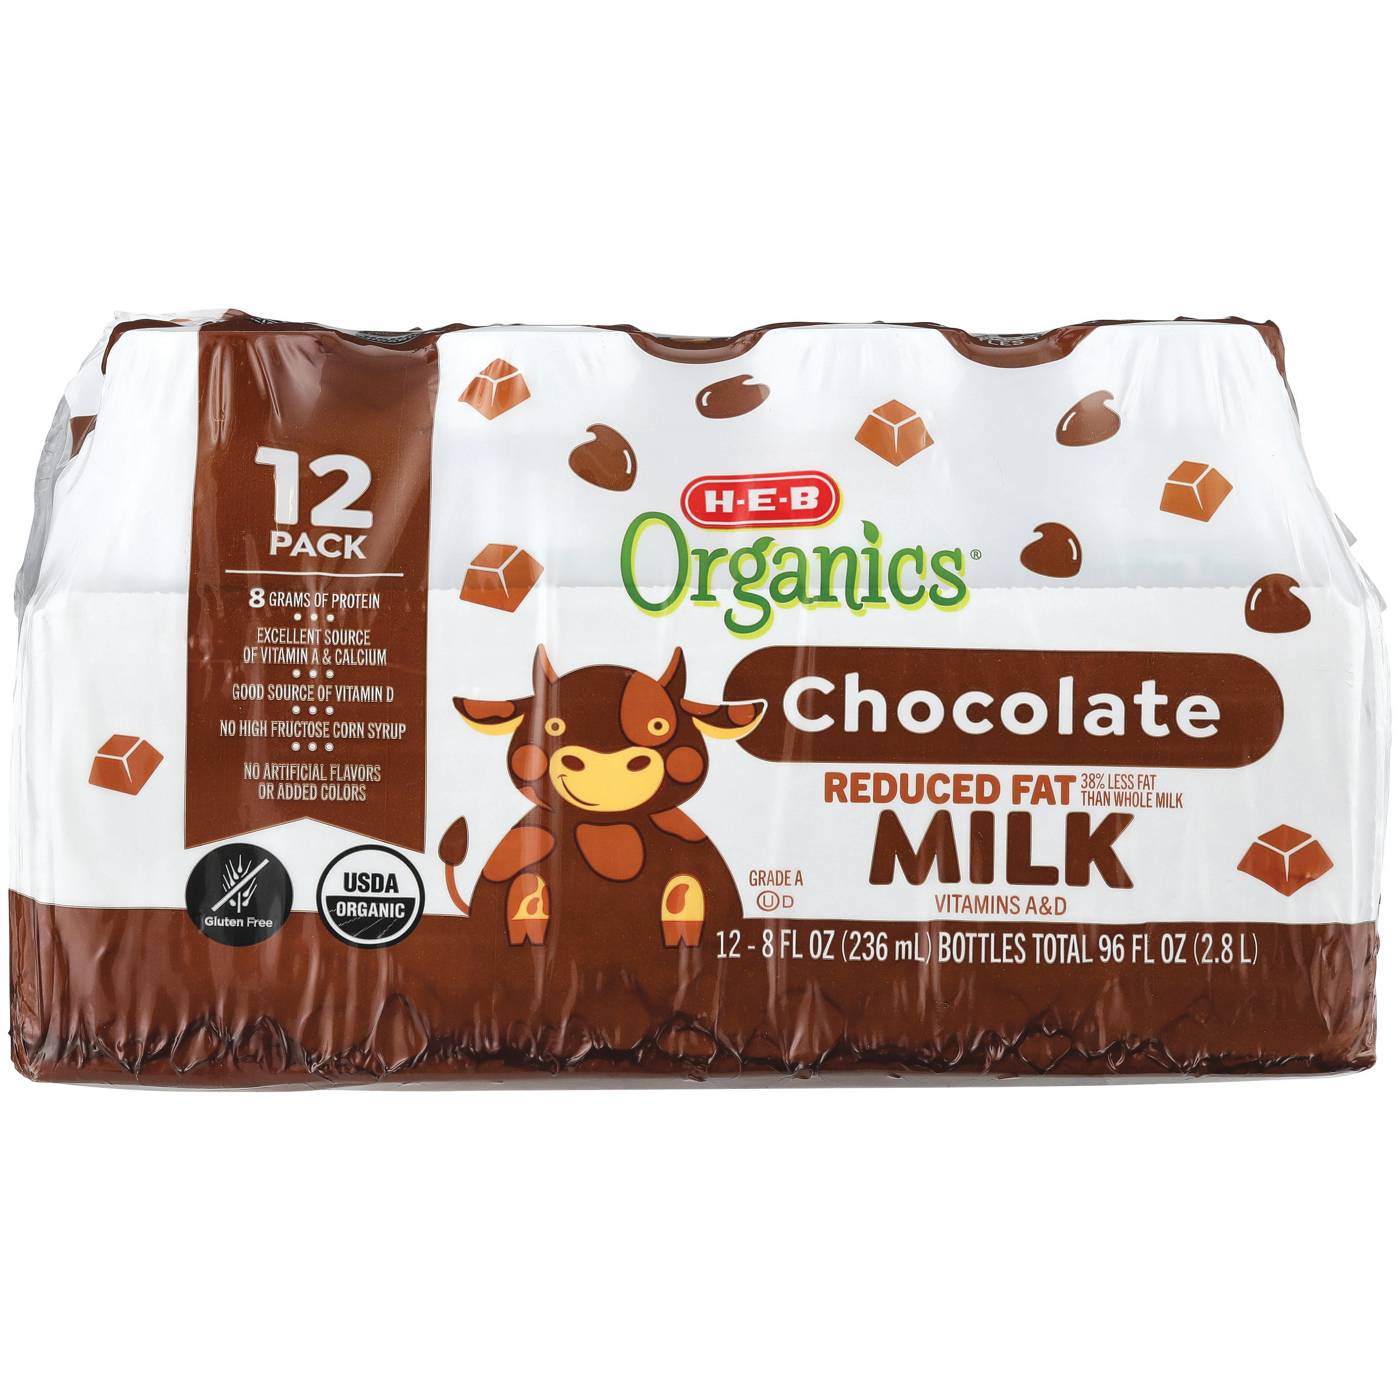 H-E-B Organics 2% Reduced Fat Chocolate Milk 12 pk Bottles; image 1 of 2